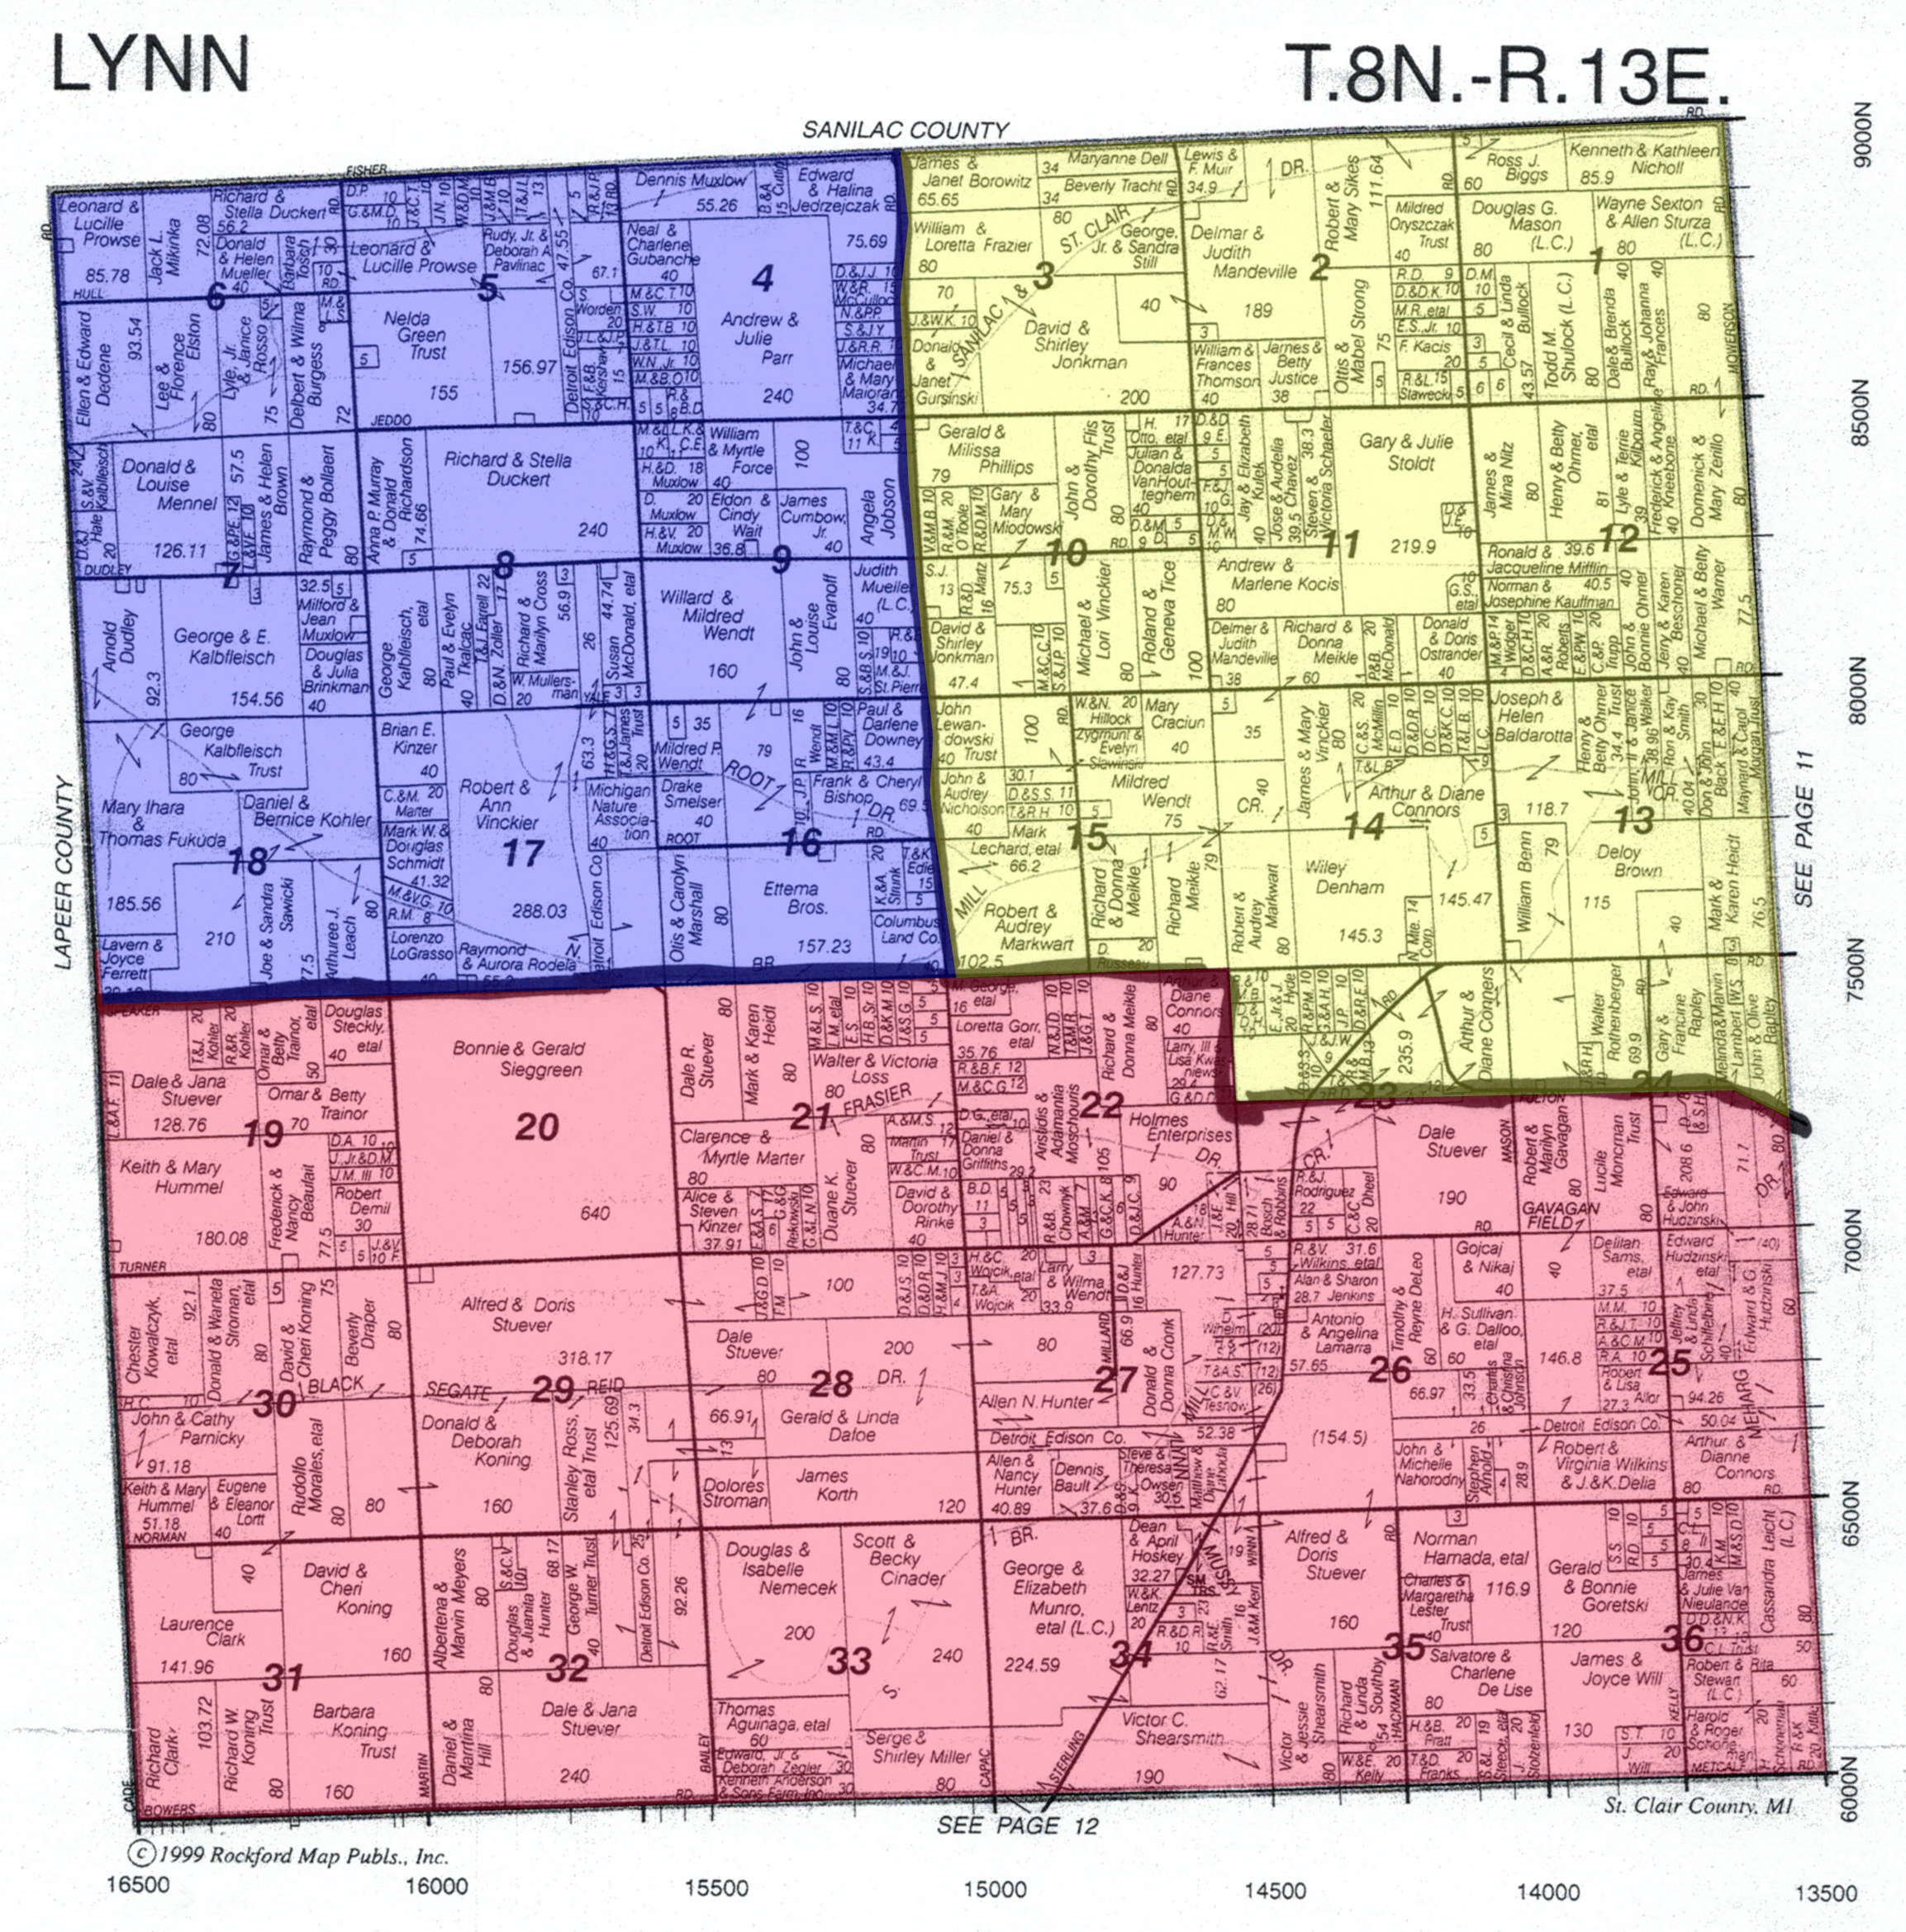 Lynn Township, MI Fire Service Map